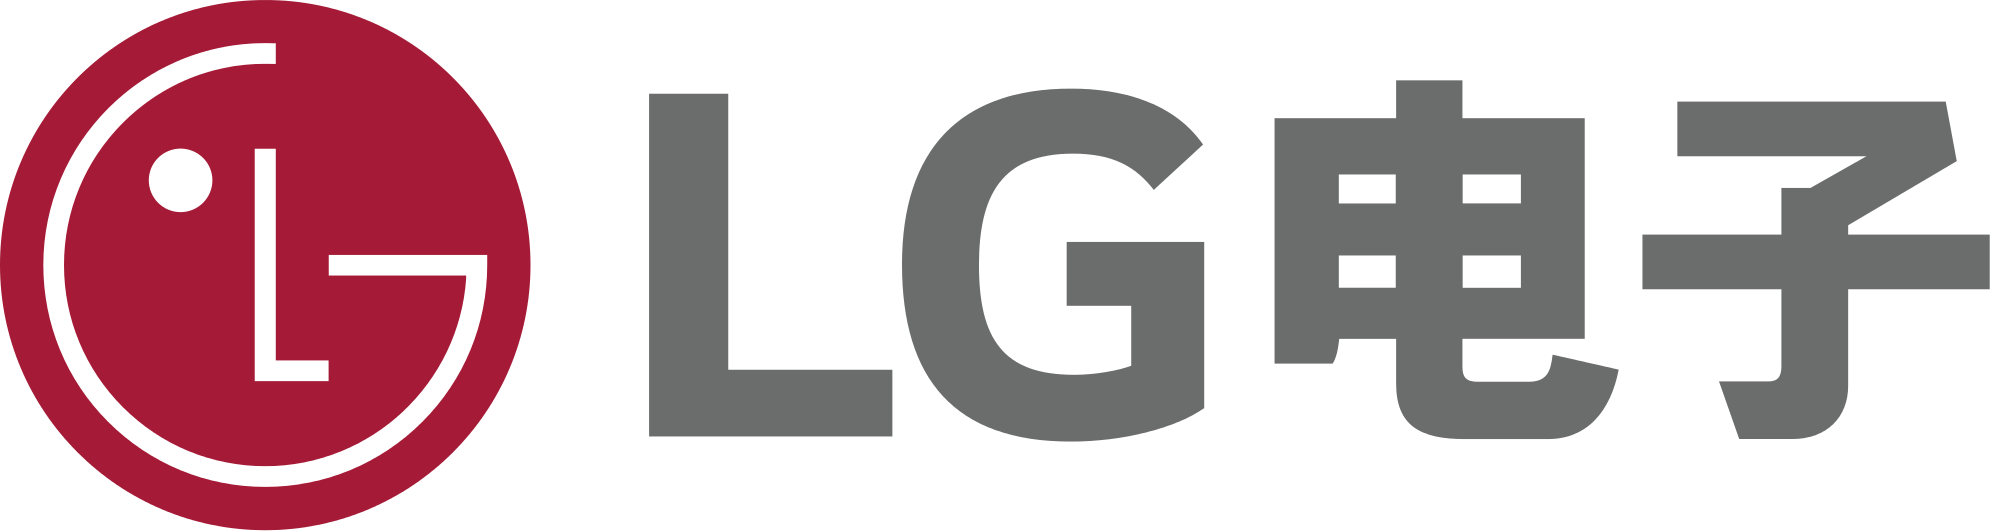 LG Electronics Logo - LG Electronics logo 2015 (hanja).svg